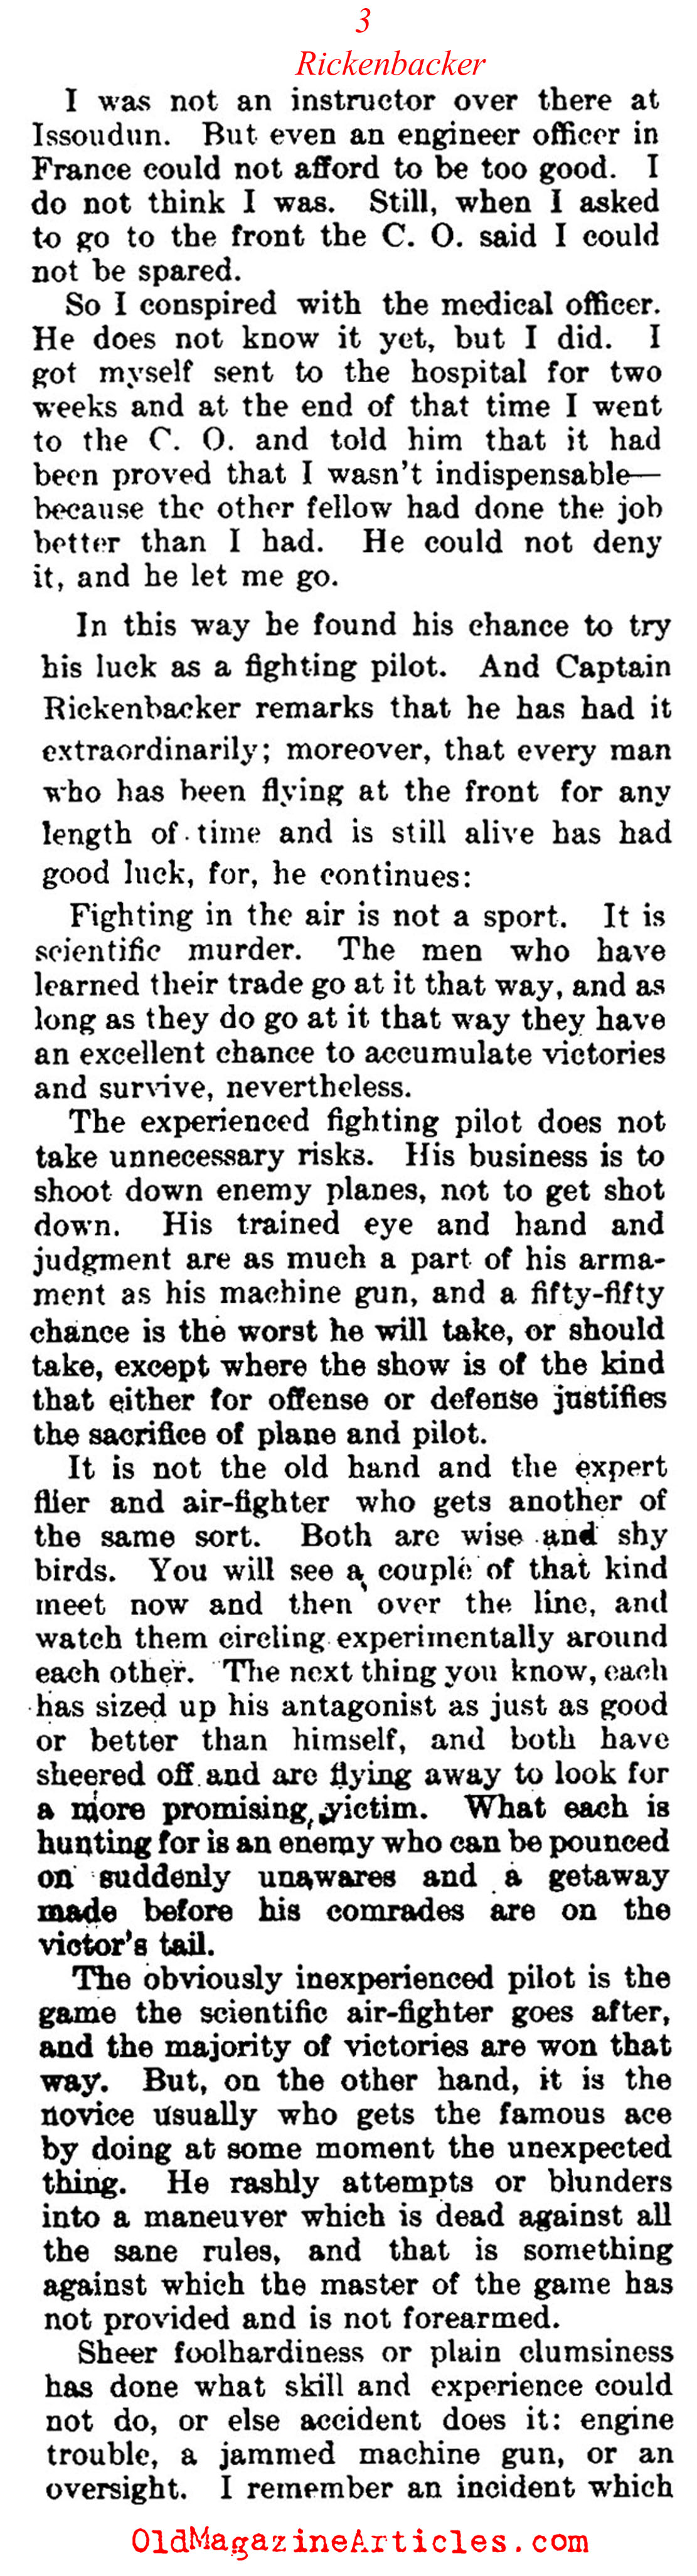 Captain Eddy Rickenbacker: Fighter Pilot (The Literary Digest, 1919)